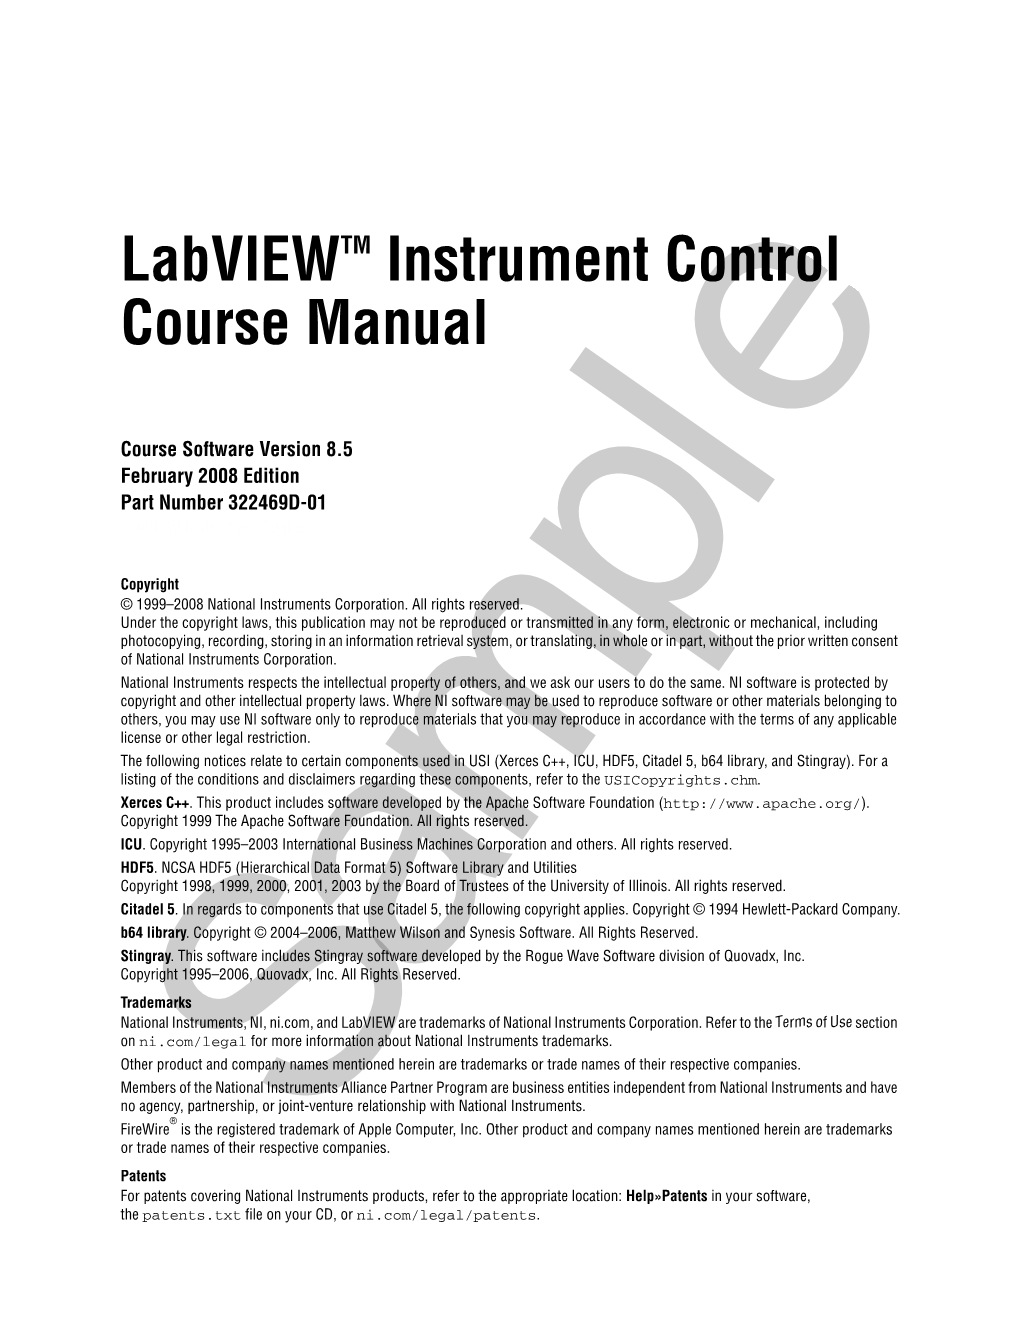 Labviewtm Instrument Control Course Manual